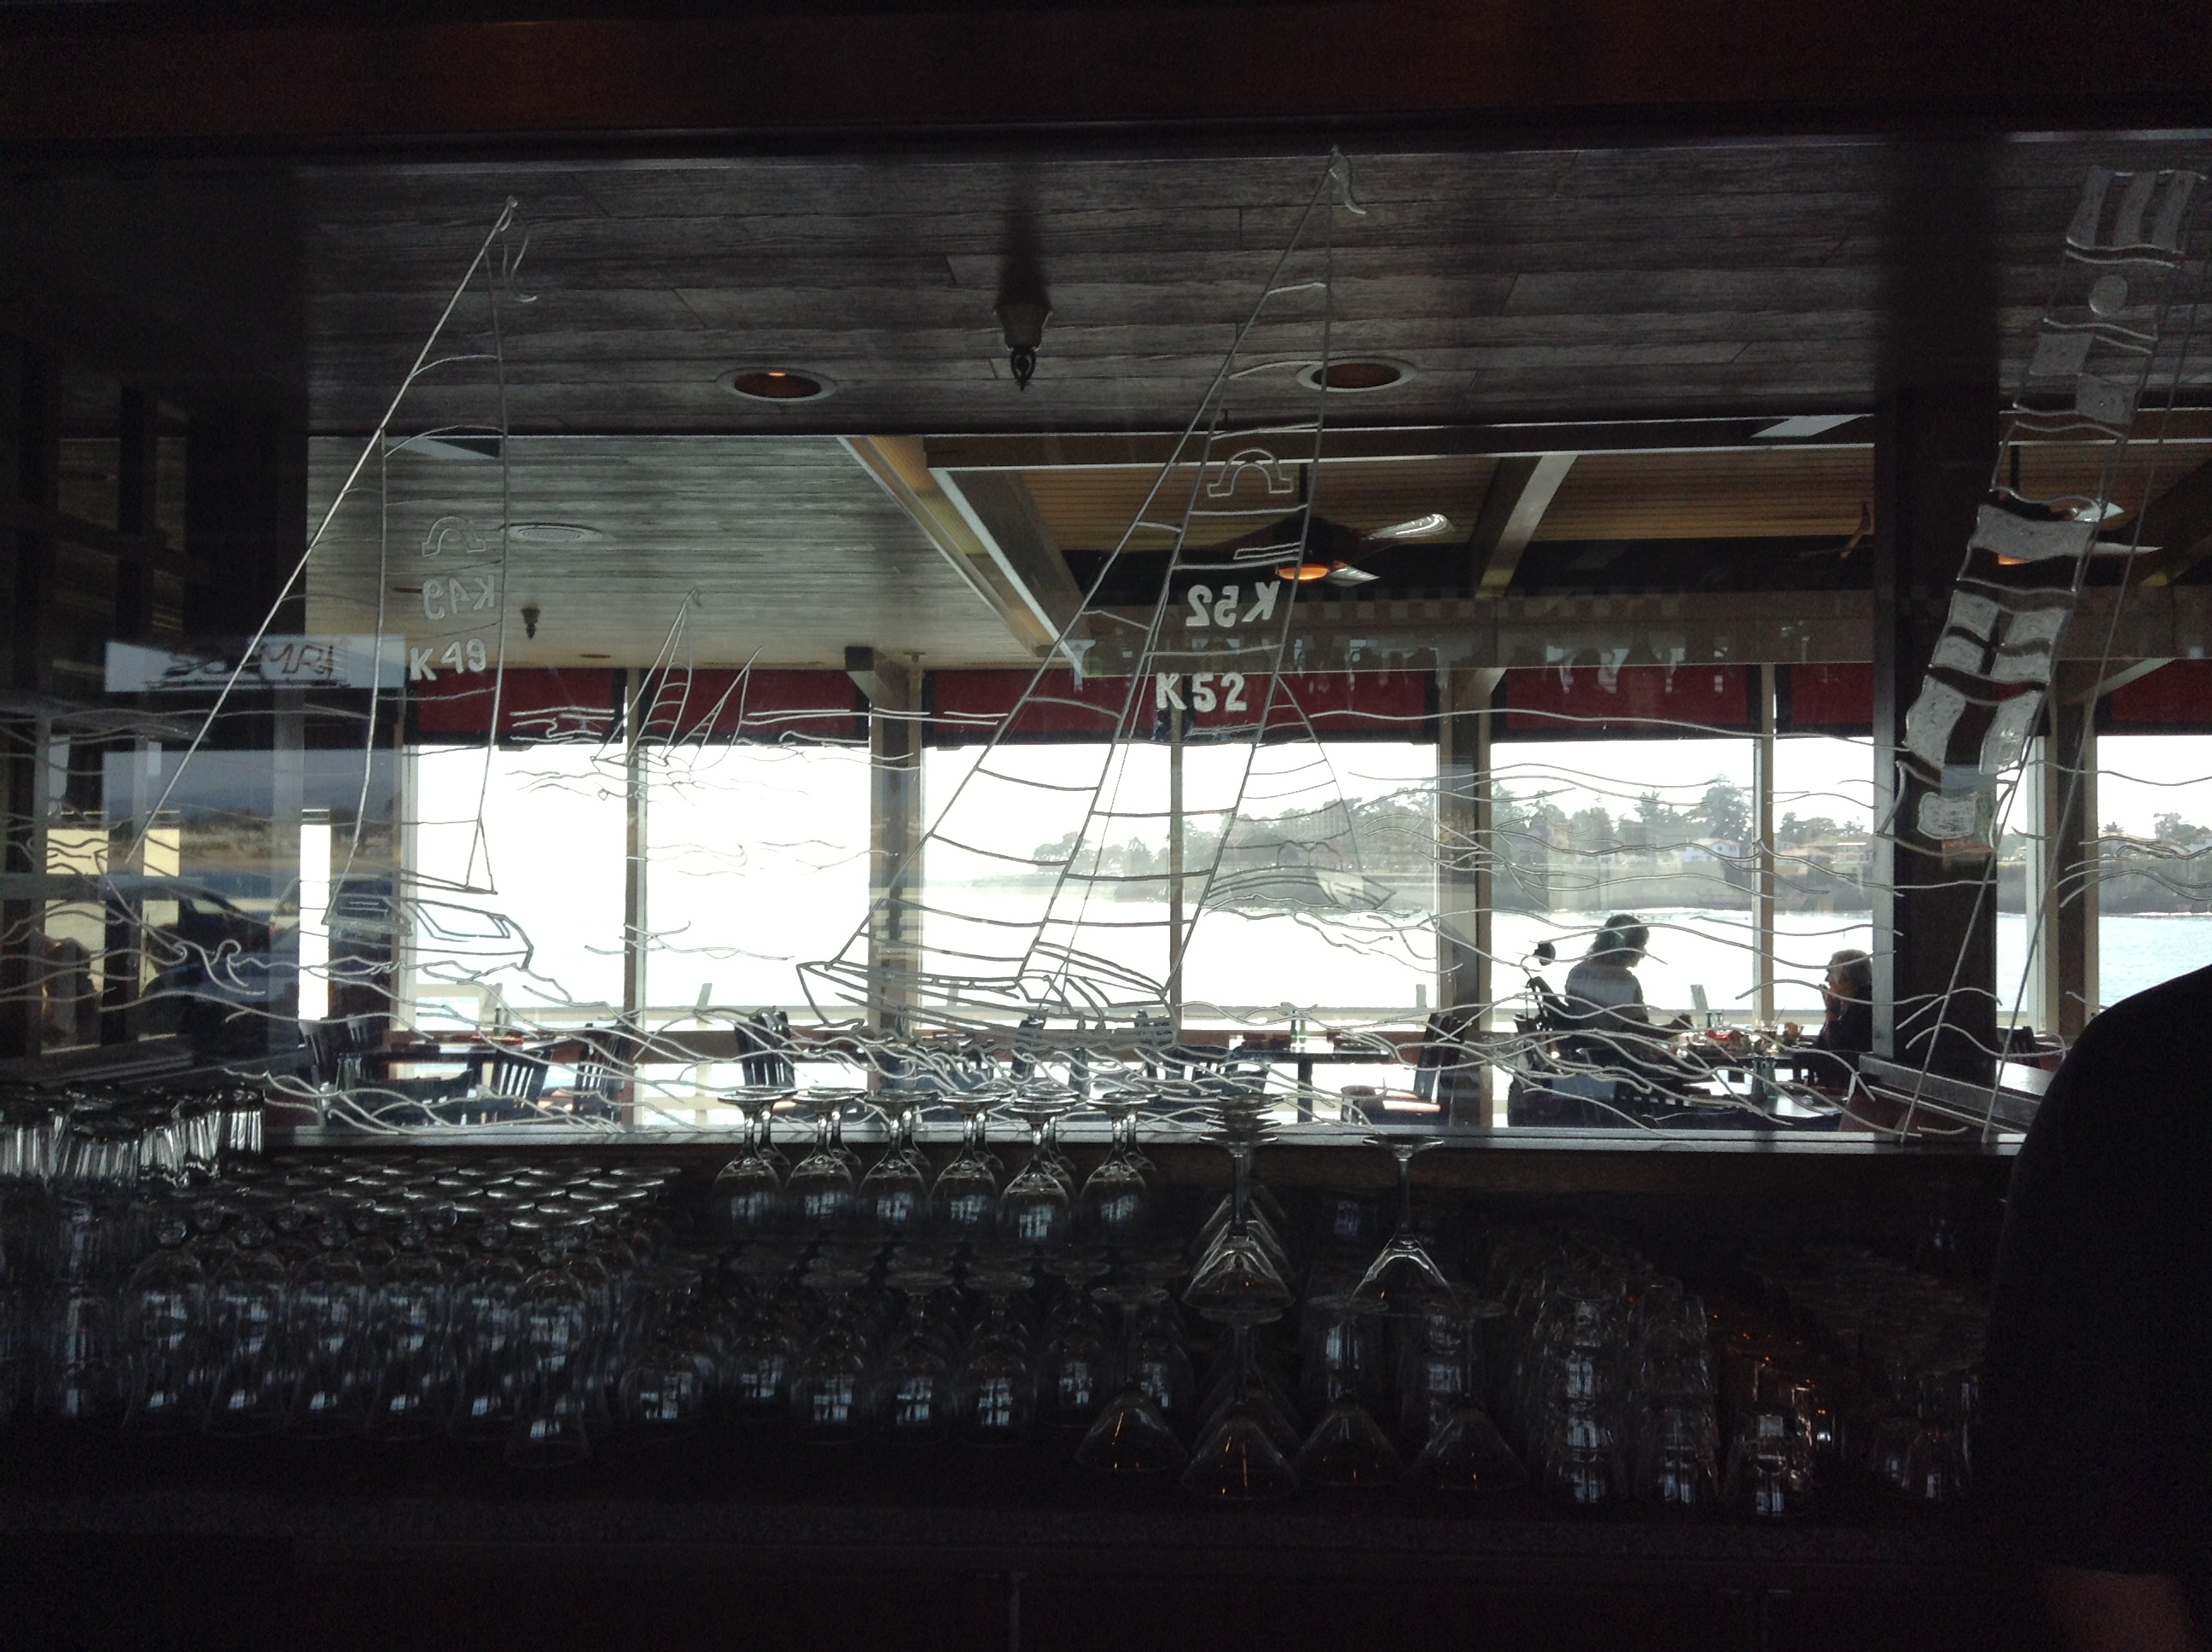 Santa Cruz view from inside a restaraunt bar on the pier